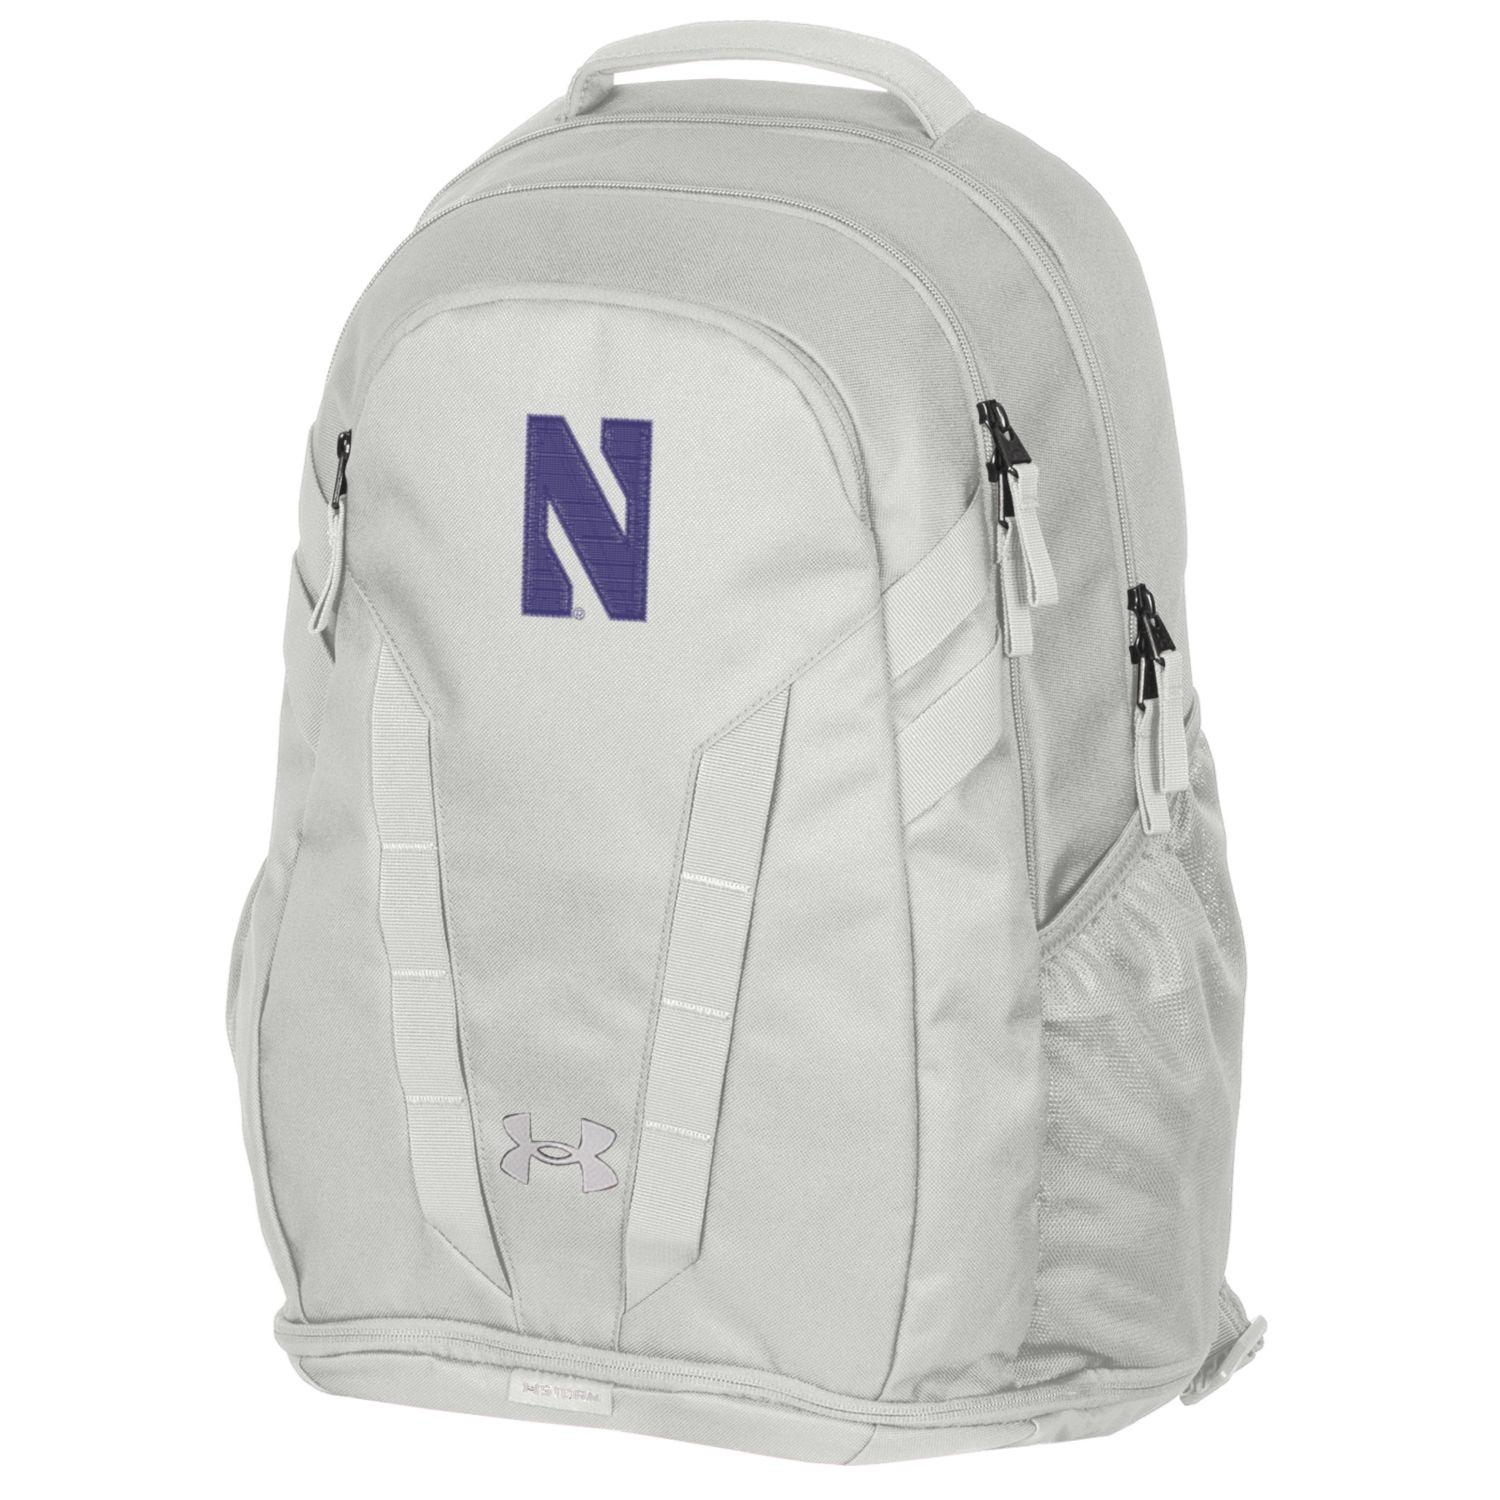 Uenighed Vestlig efter det Northwestern University Wildcats Under Armour White Hustle 5.0 Backpack  with Stylized N in Solid Purple